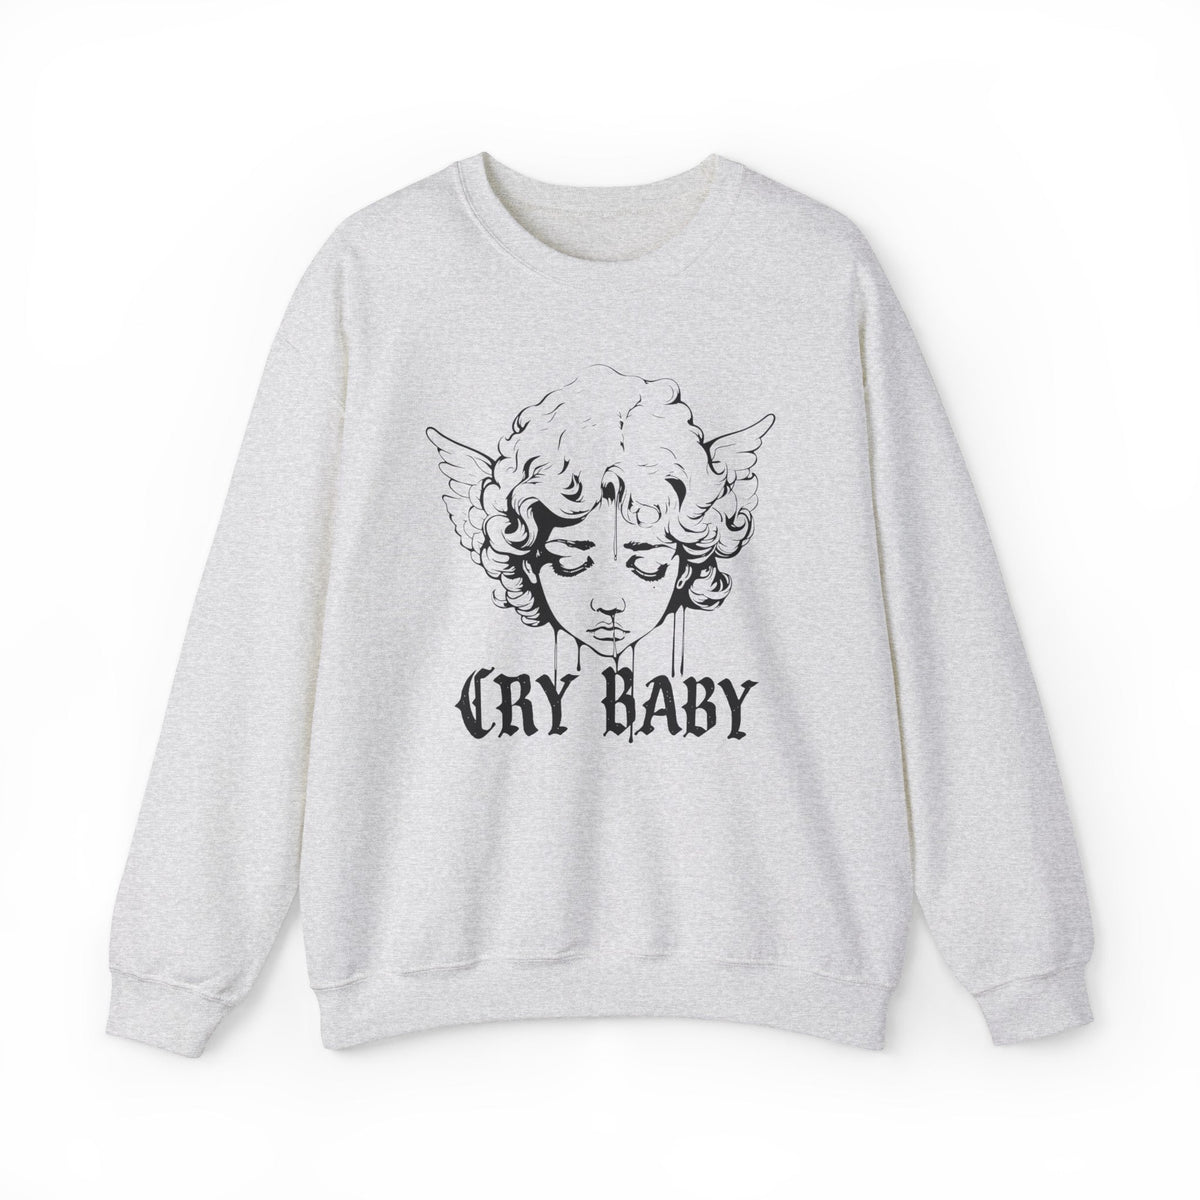 Crybaby Graffiti Cherub Crew Neck Sweatshirt - Goth Cloth Co.Sweatshirt16973717296855829727